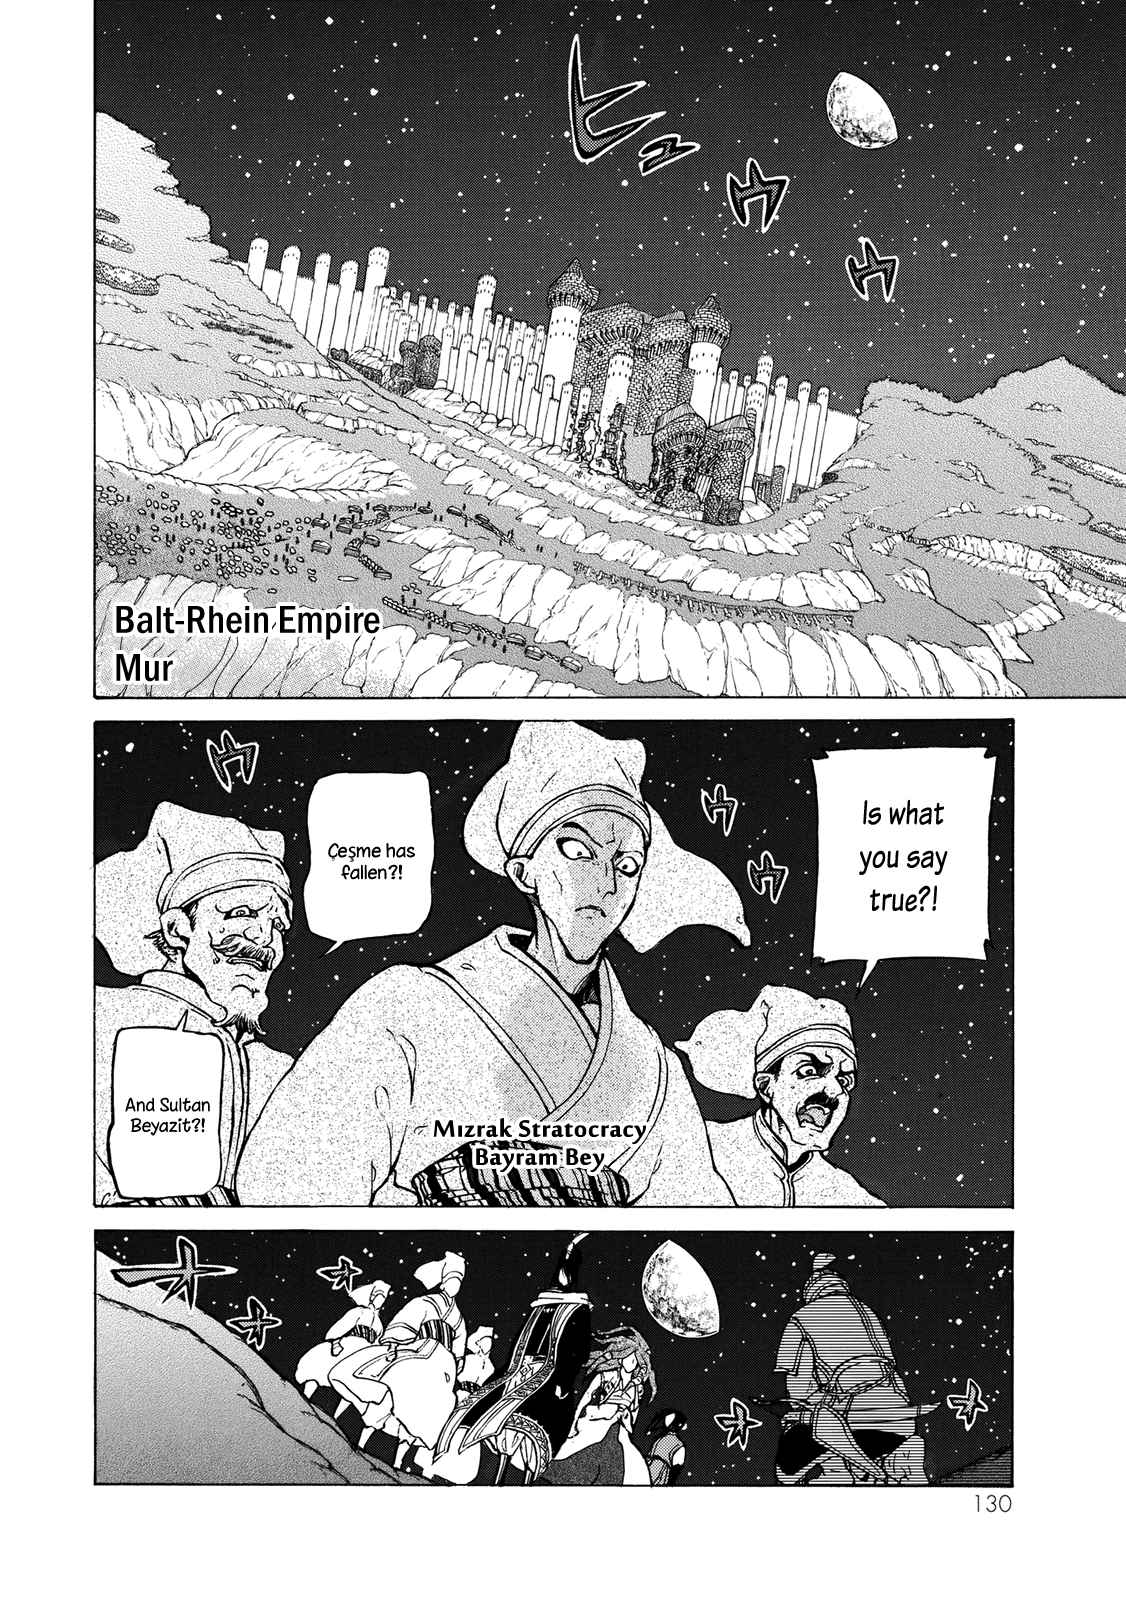 Shoukoku no Altair Vol. 21 Ch. 111 The Golden Eagle Returns